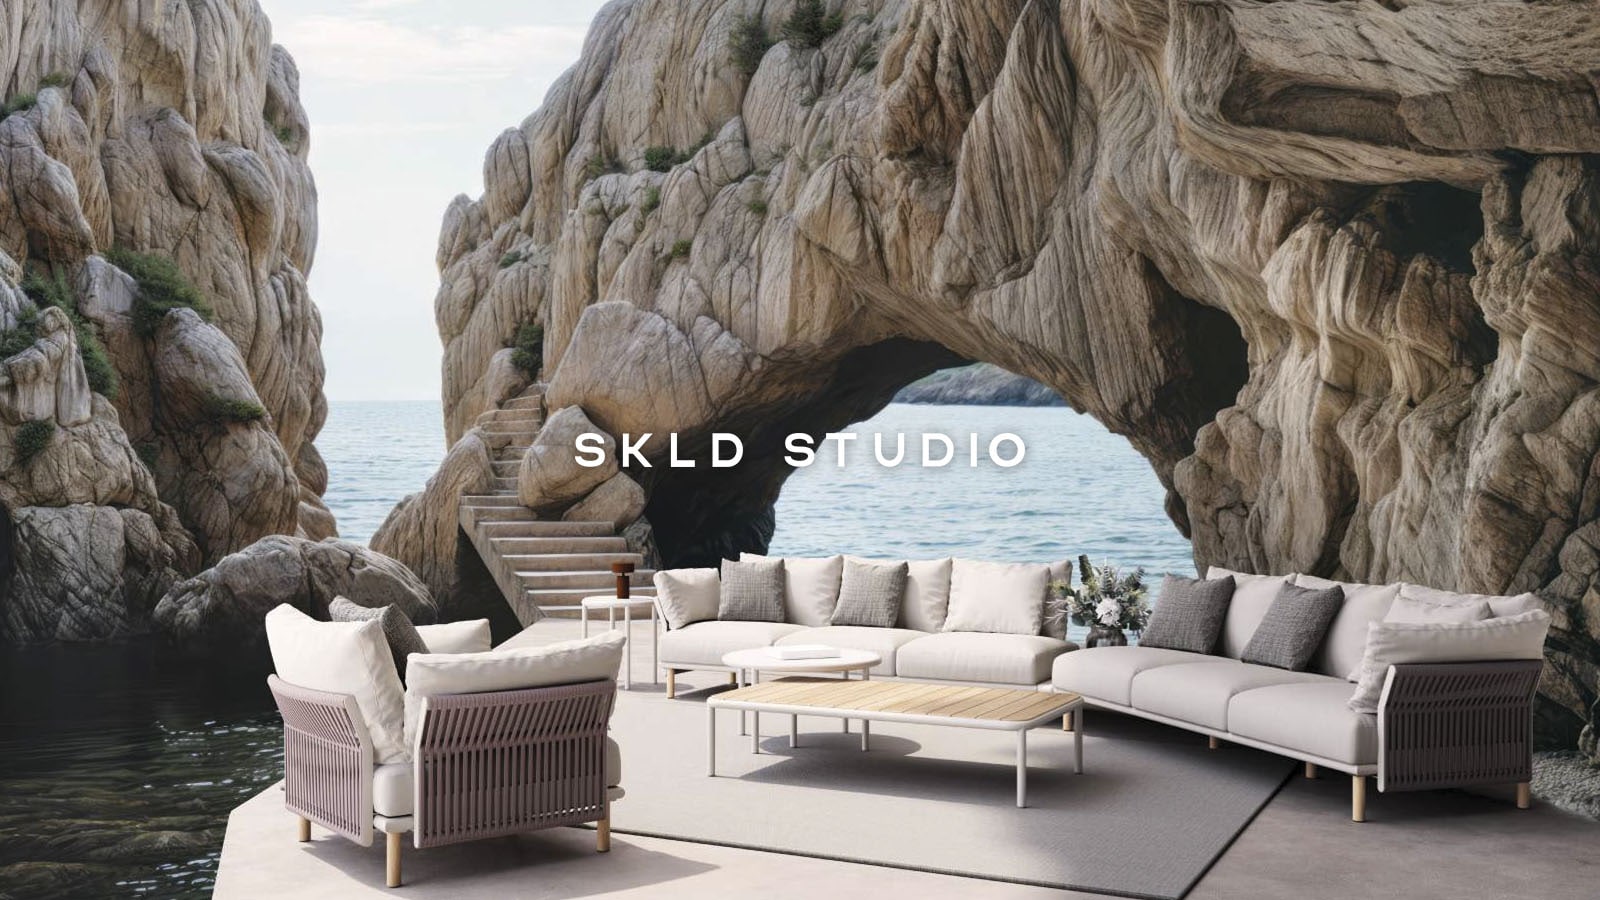 SKLD Studio Home Design